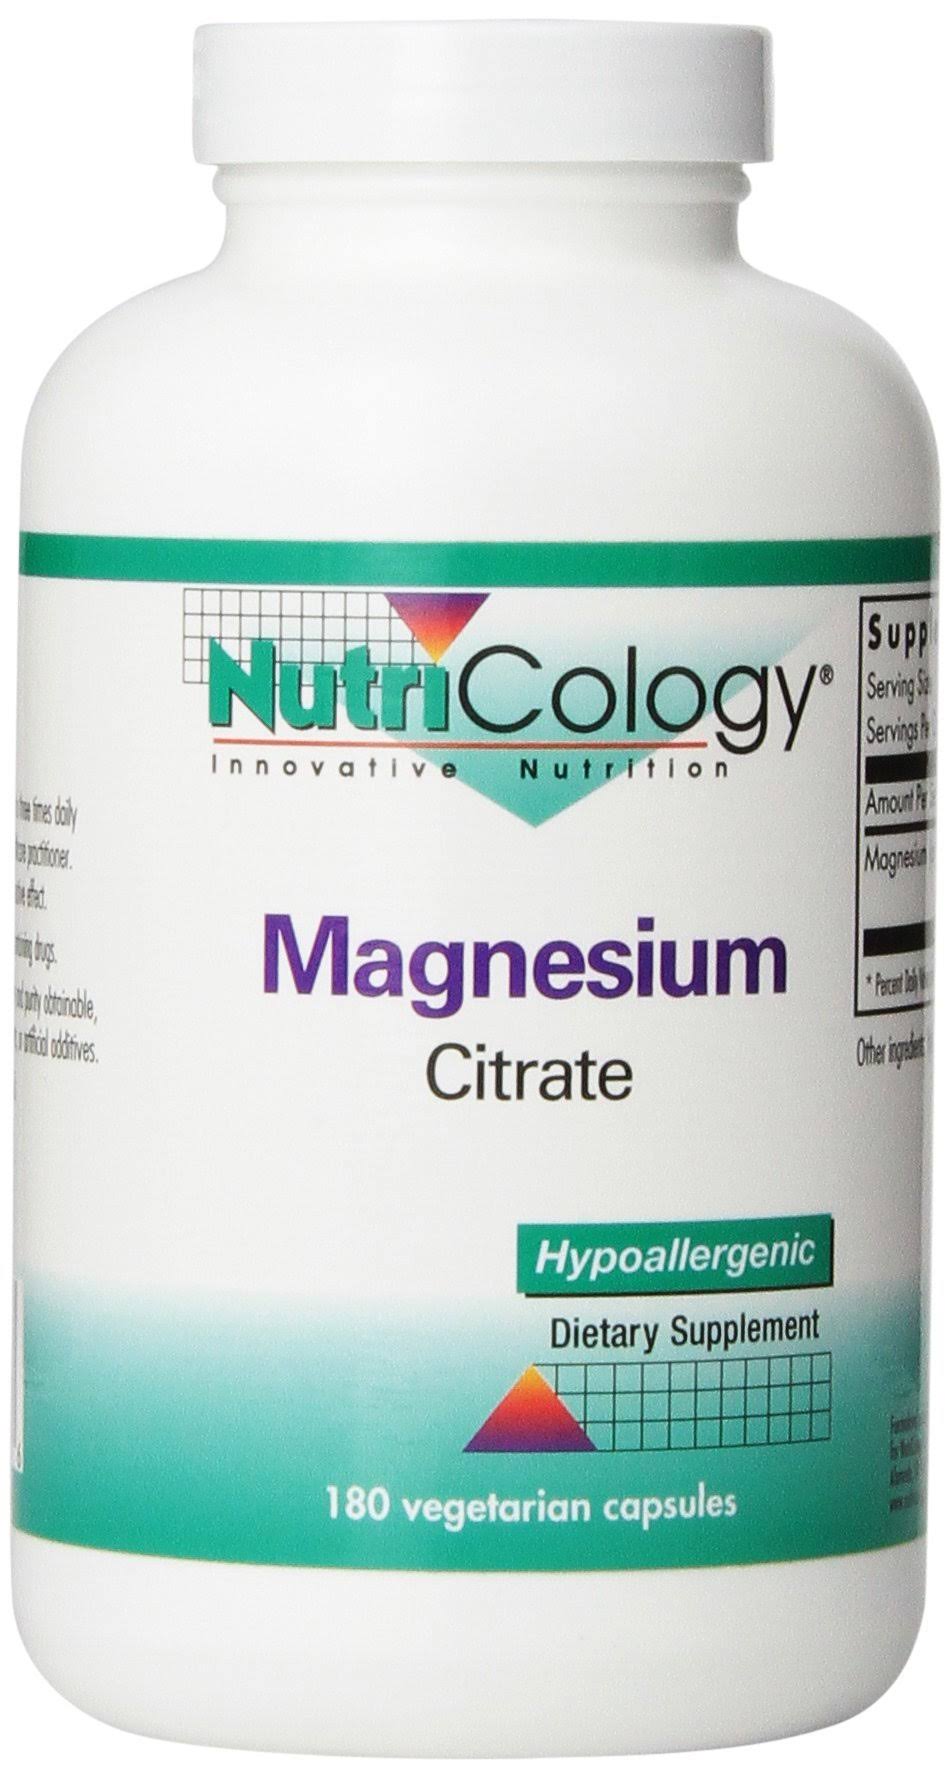 Nutricology Magnesium Citrate Supplement - 180 Vegetarian Capsules